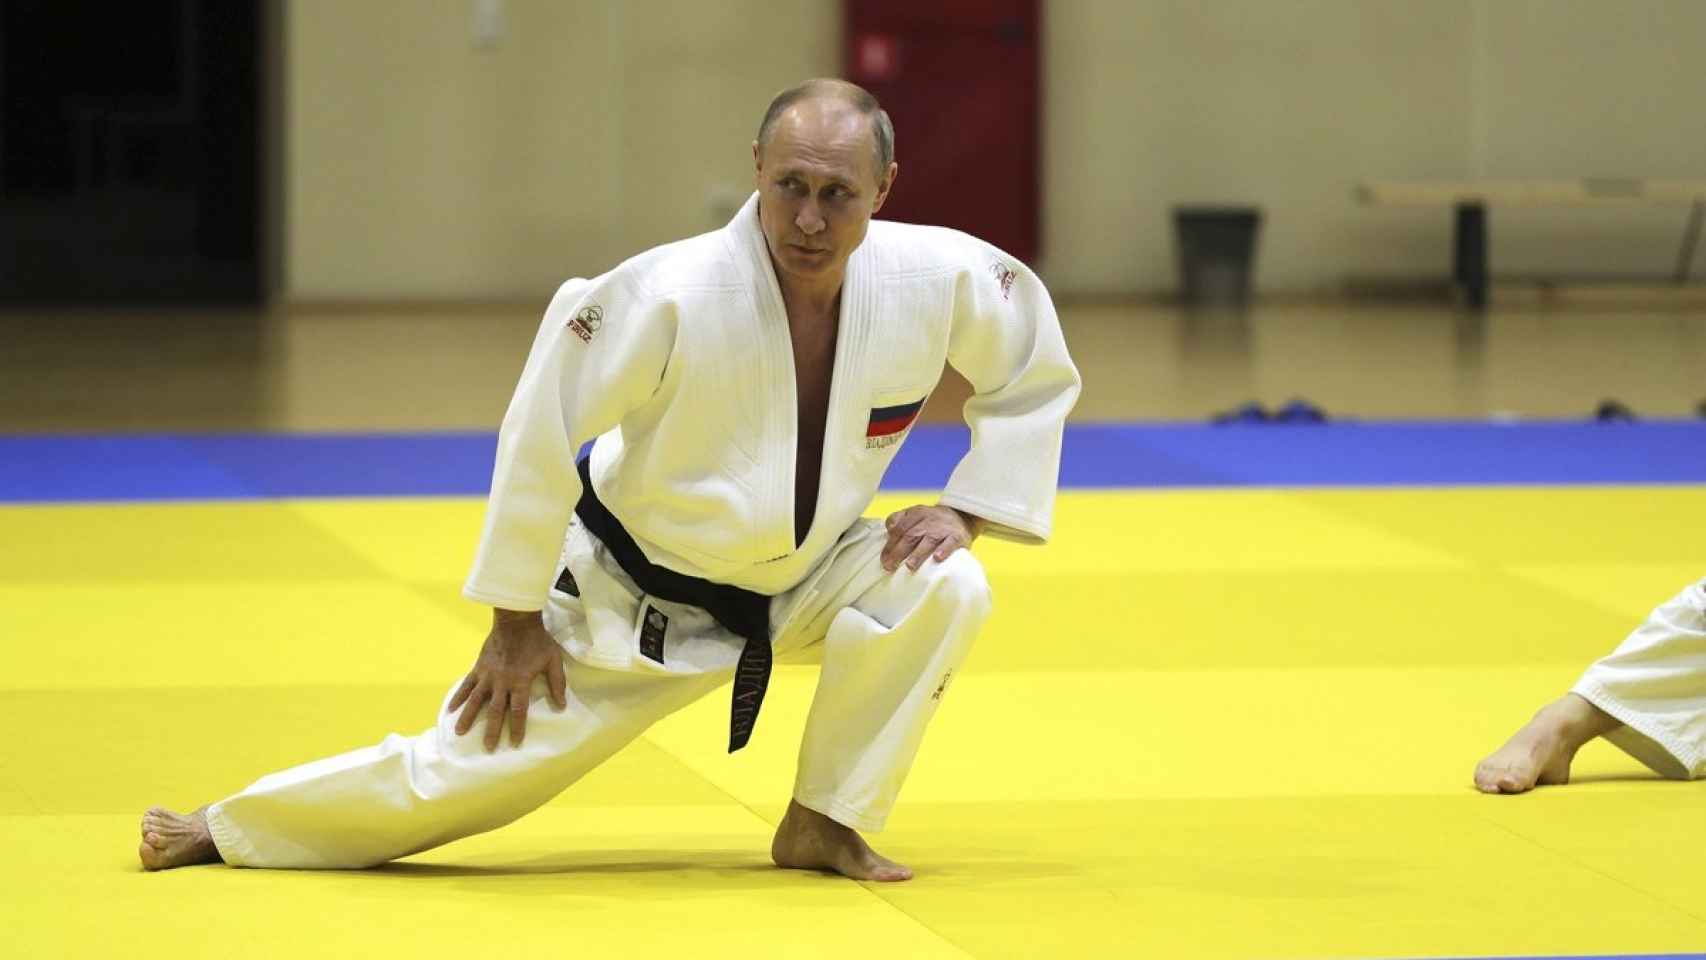 Imagen de Putin practicando judo.